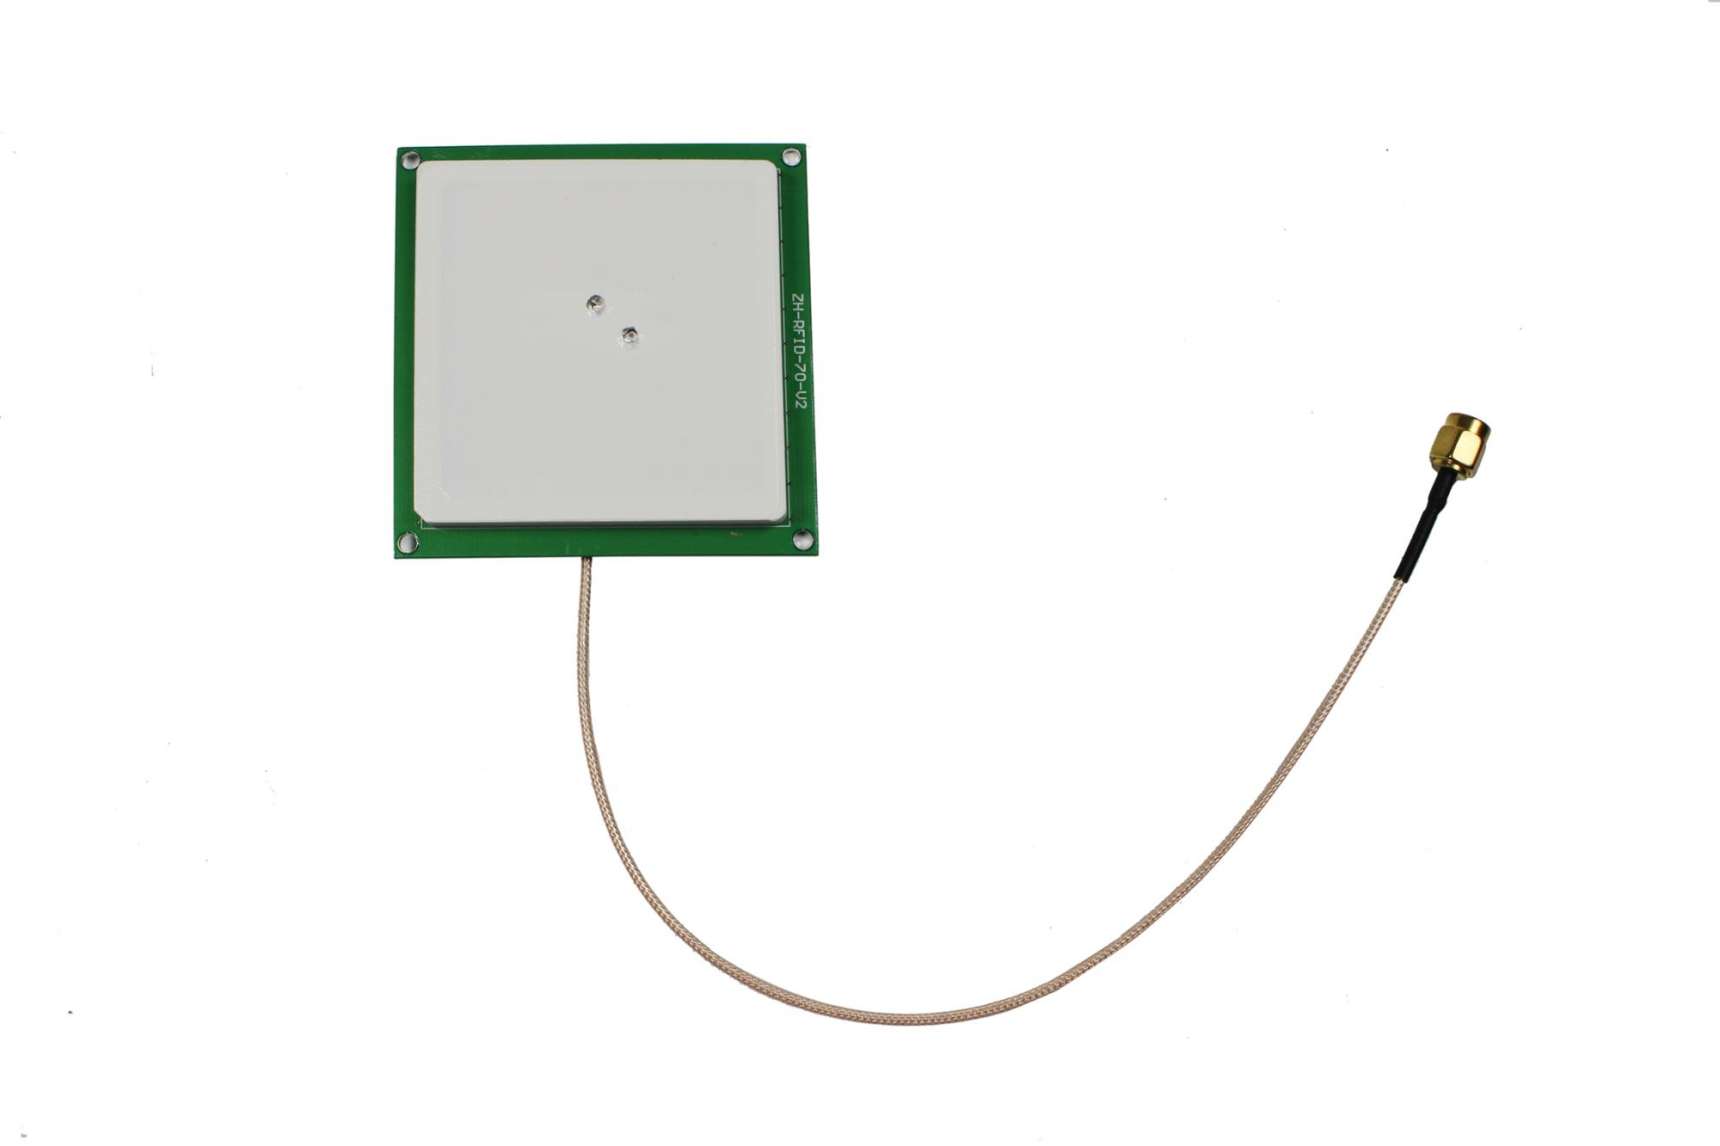 Dual Feeder 4 dBi Antenna Gain UHF RFID Ceramic Antenna with SMA Connector